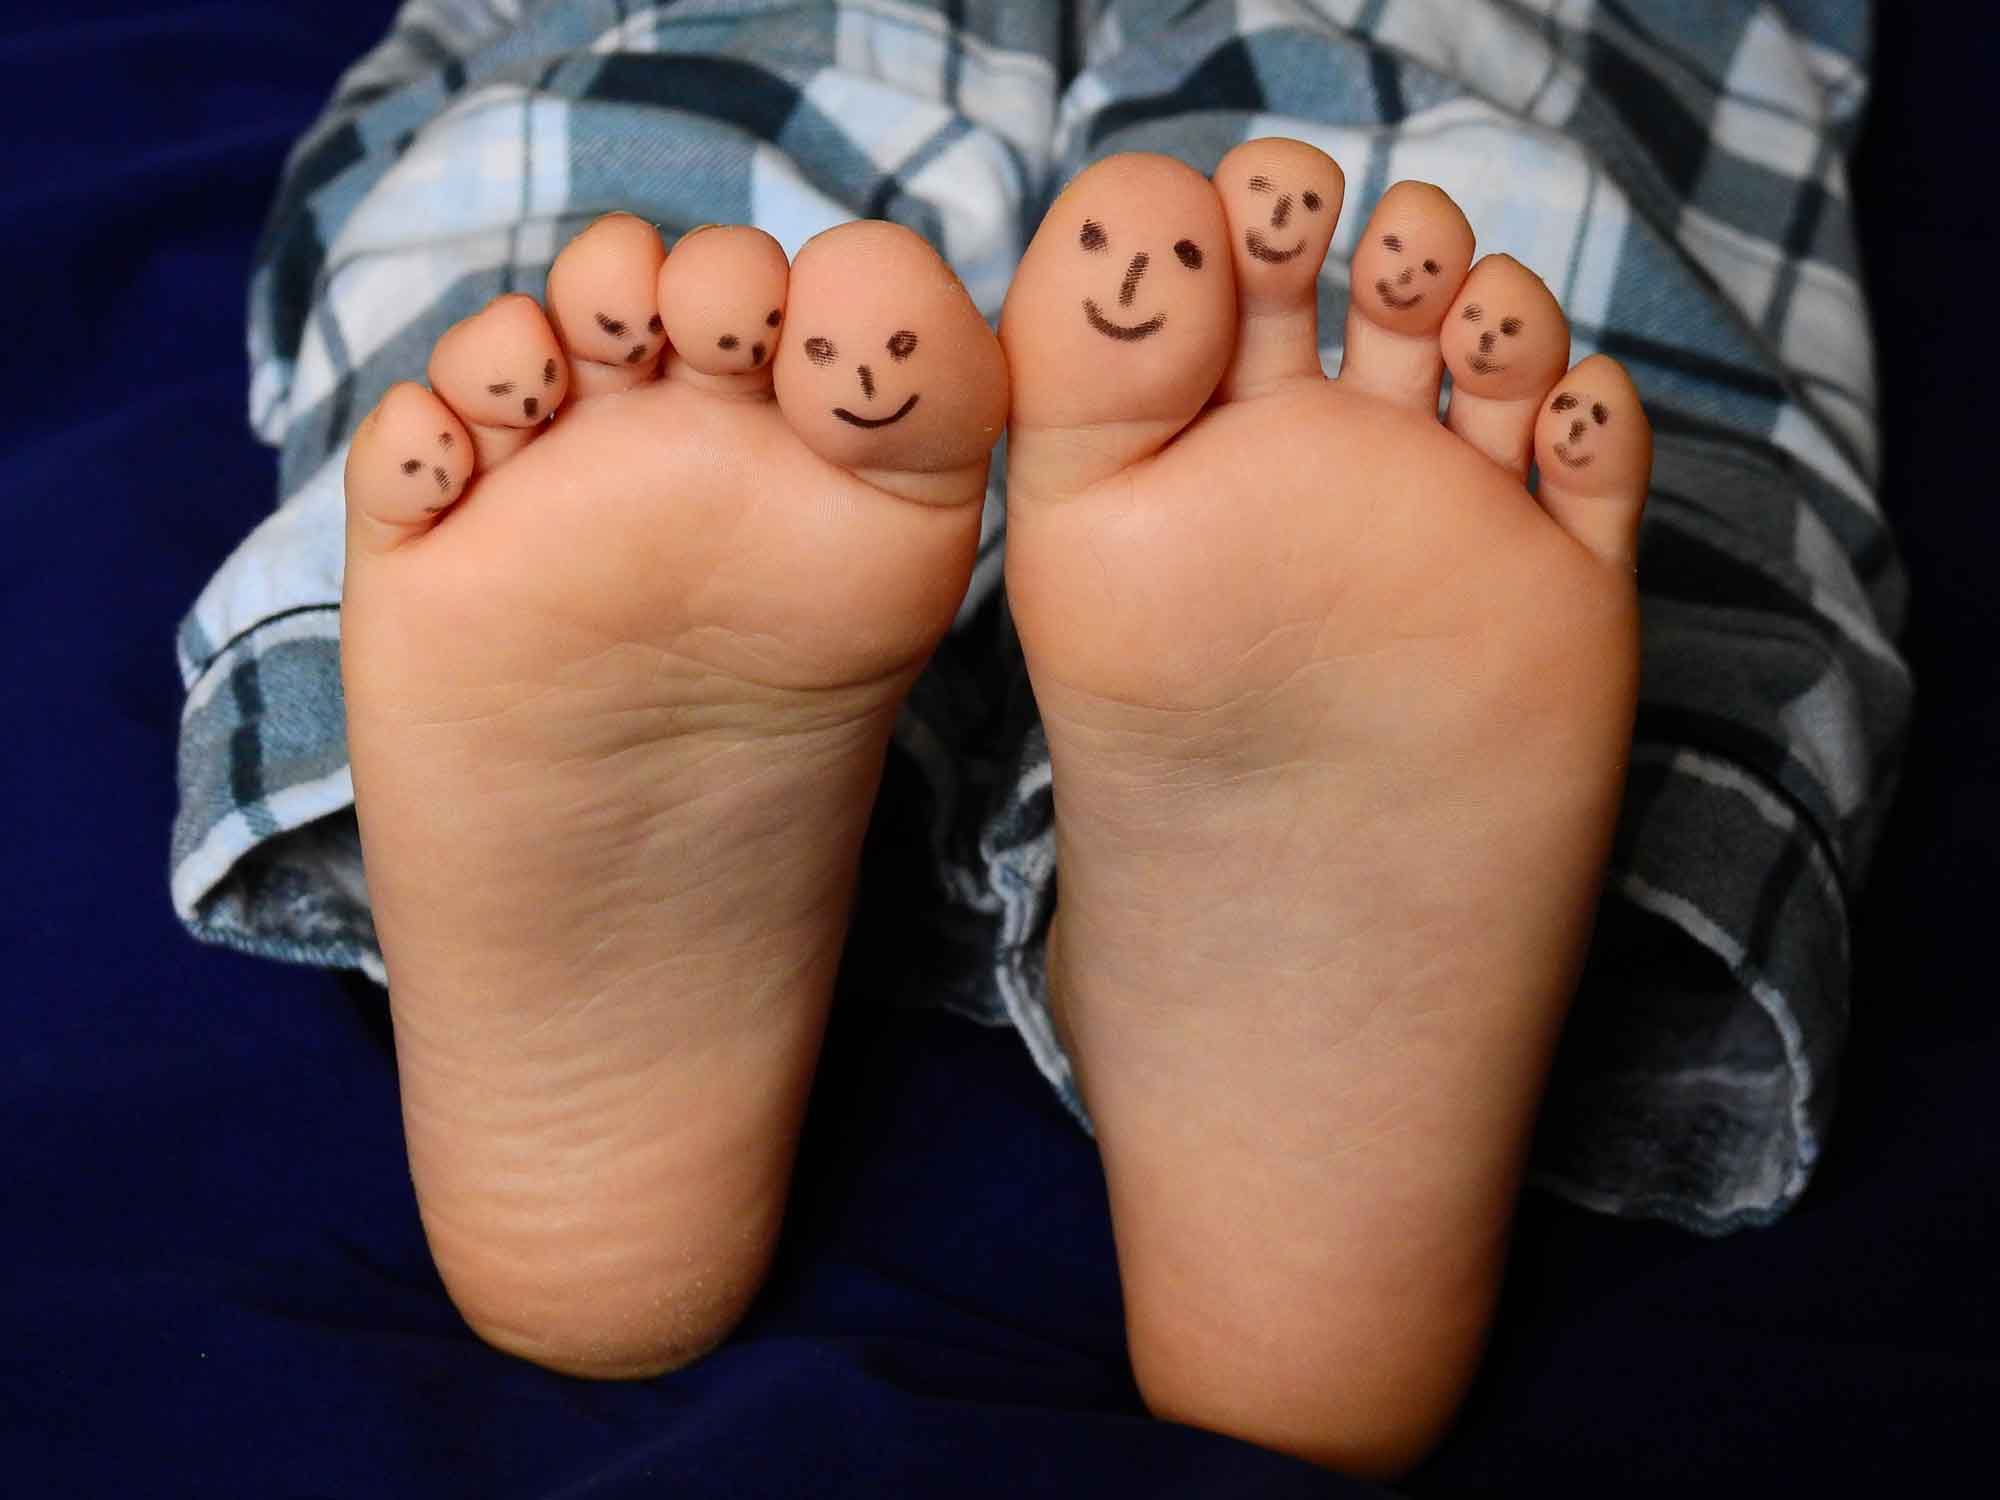 feet (c) pixabay